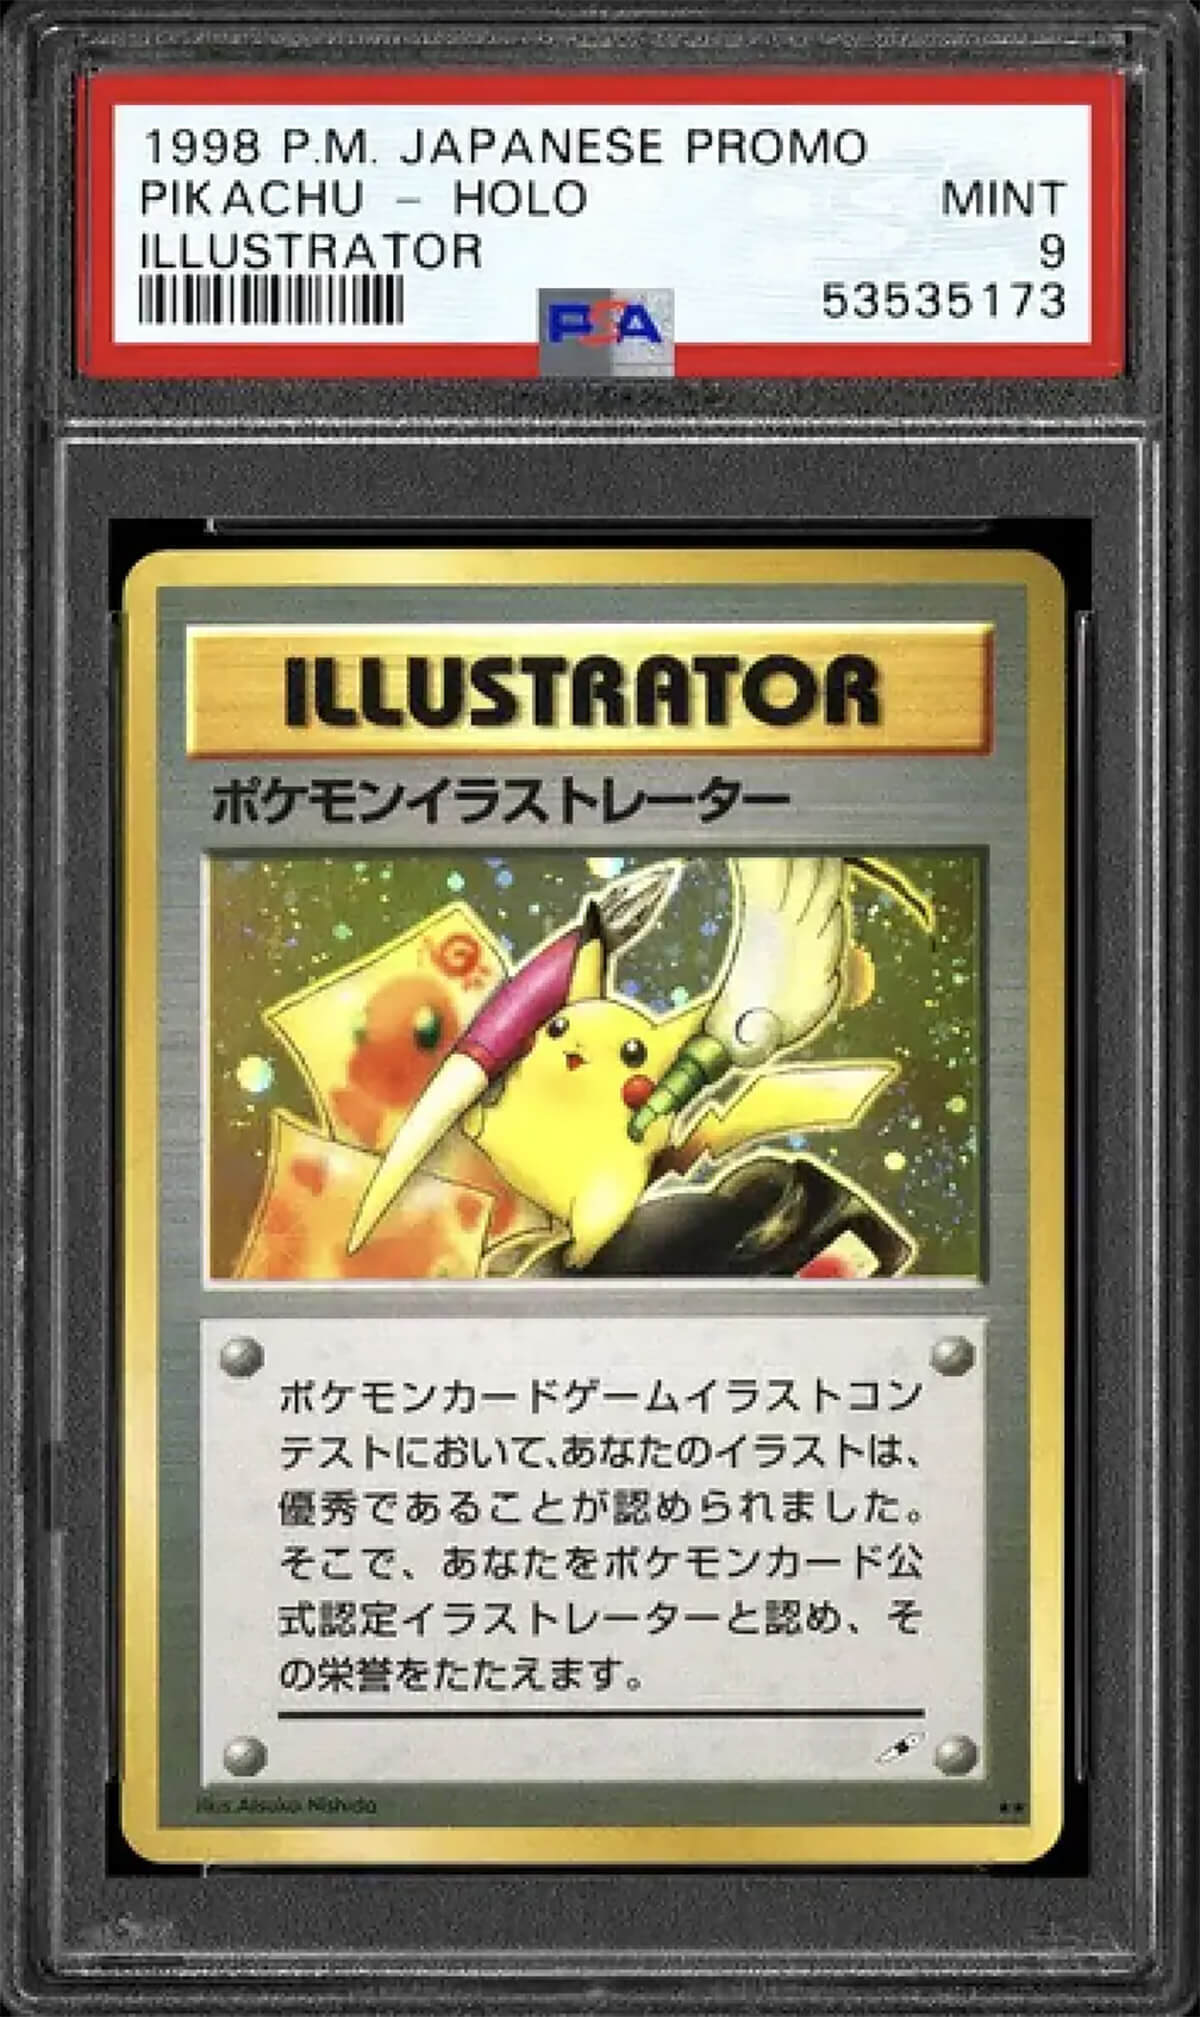 1998 Pocket Monsters Japanese Promo "Illustrator" Pikachu Holo PSA NM 7